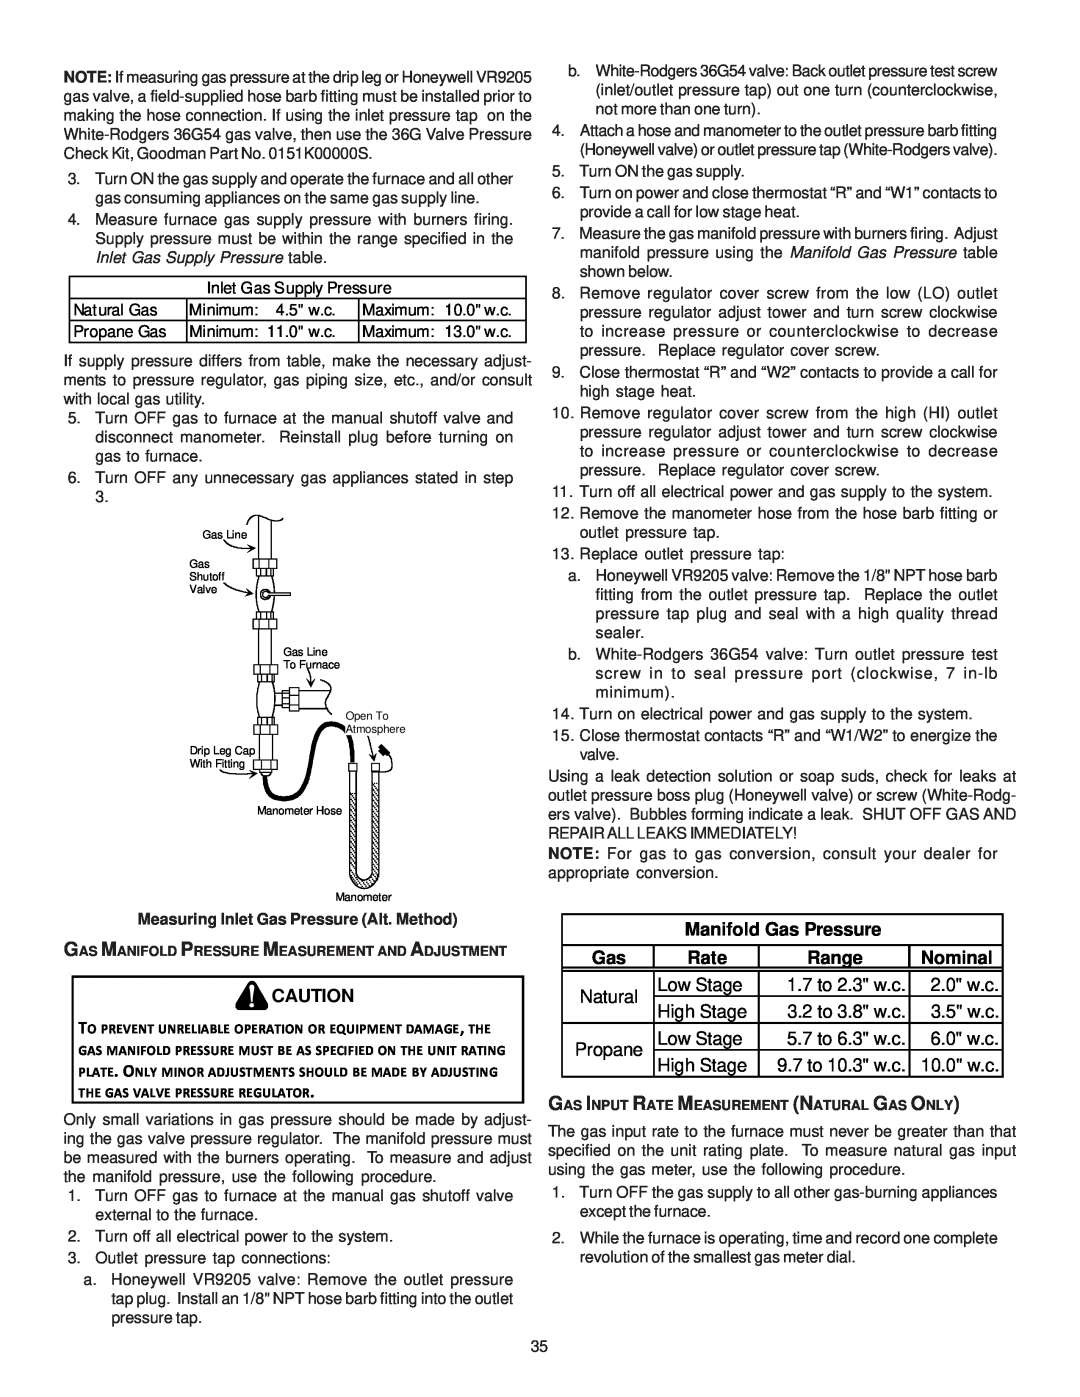 Goodman Mfg GAS-FIRED WARM AIR FURNACE, MH95/ACSH96/AMEH96/ GCH95/GME95/GCH9 Manifold Gas Pressure, Rate, Range, Nominal 